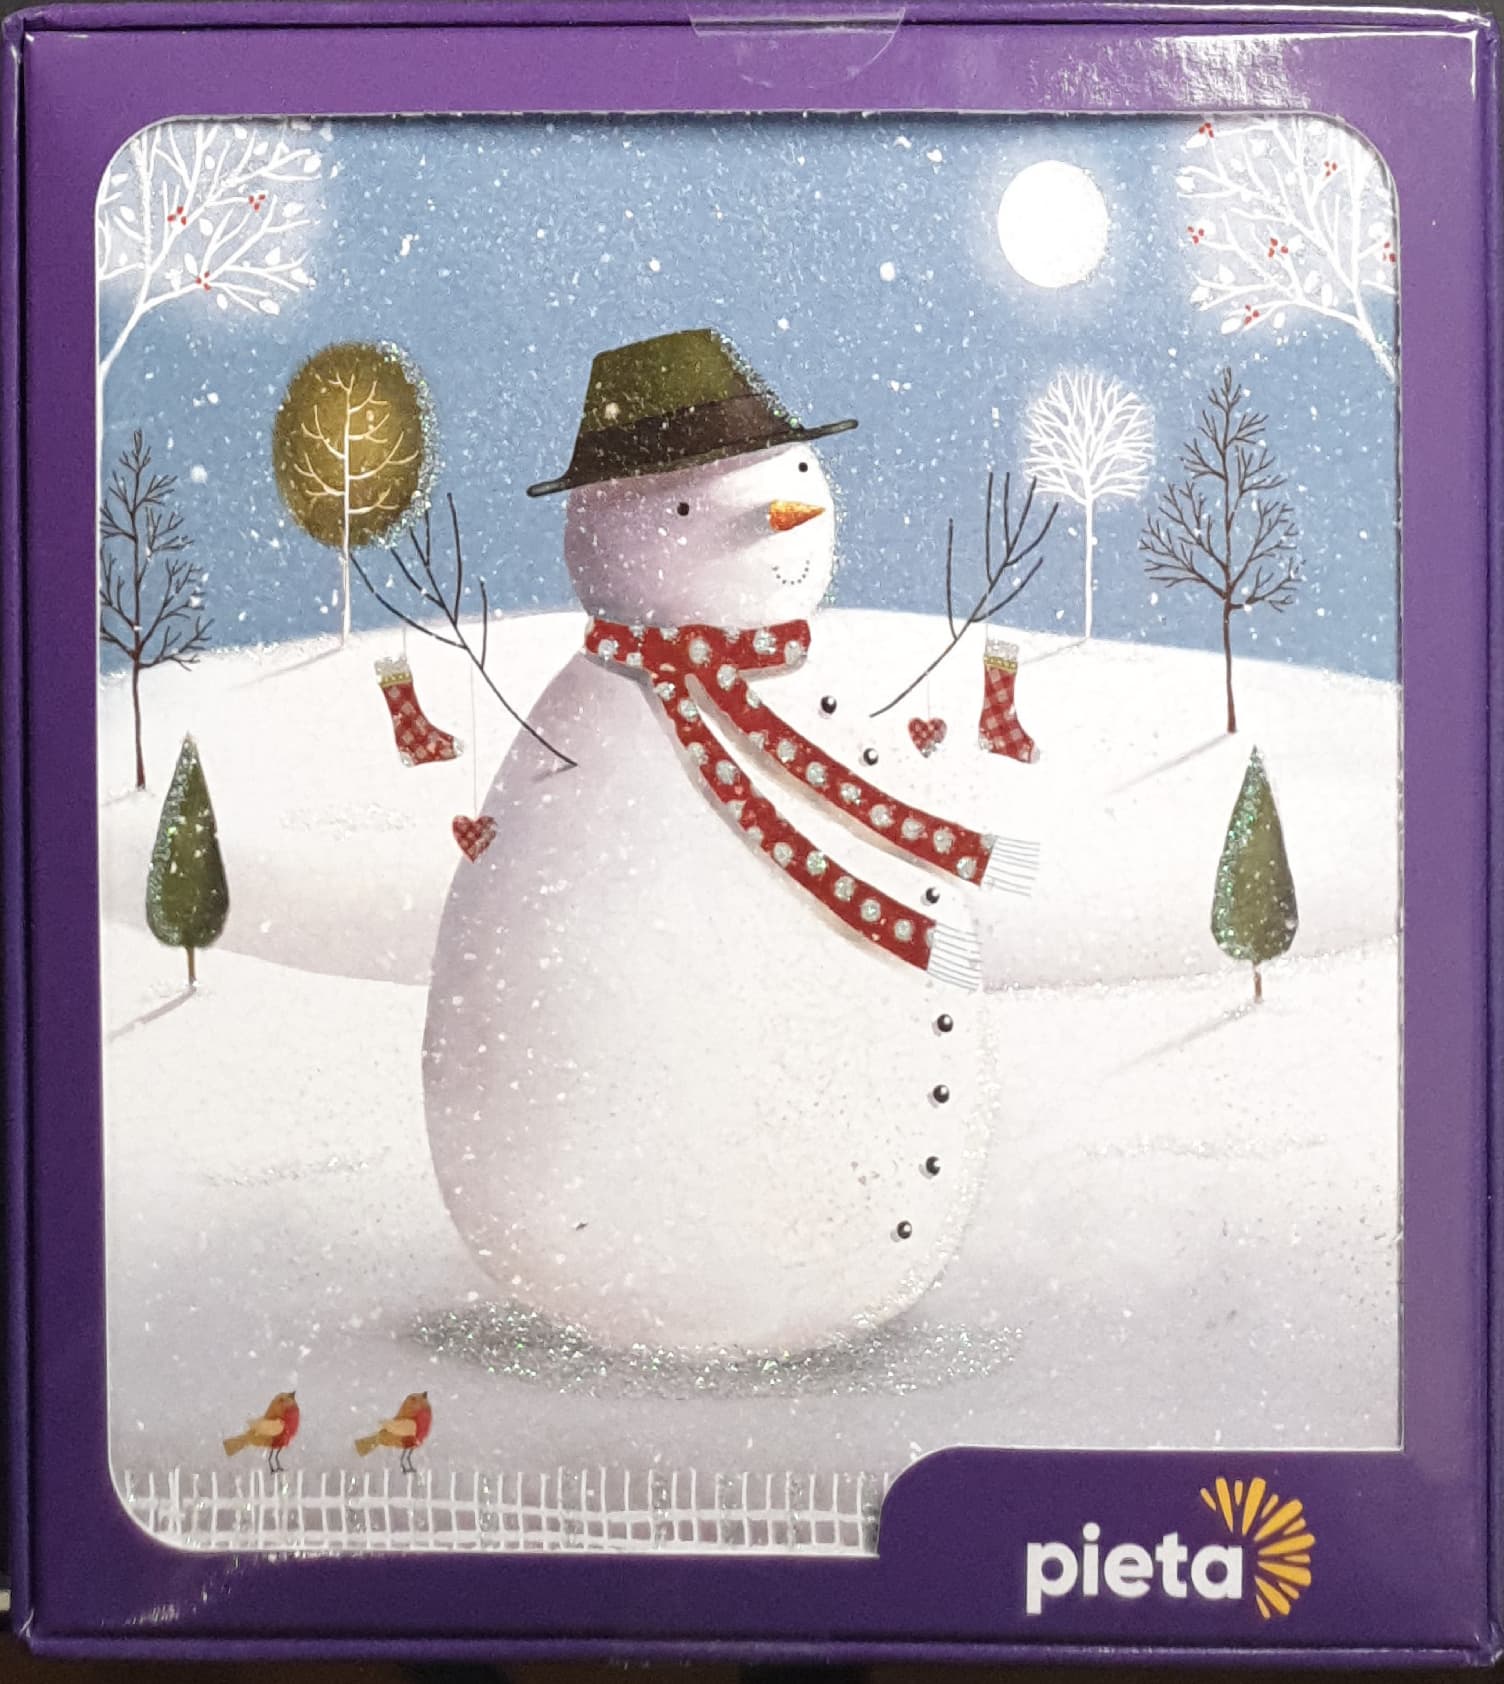 Charity Christmas Card (In Irish & English) - Box of 16 / Pieta - Happy Snowman & Snow